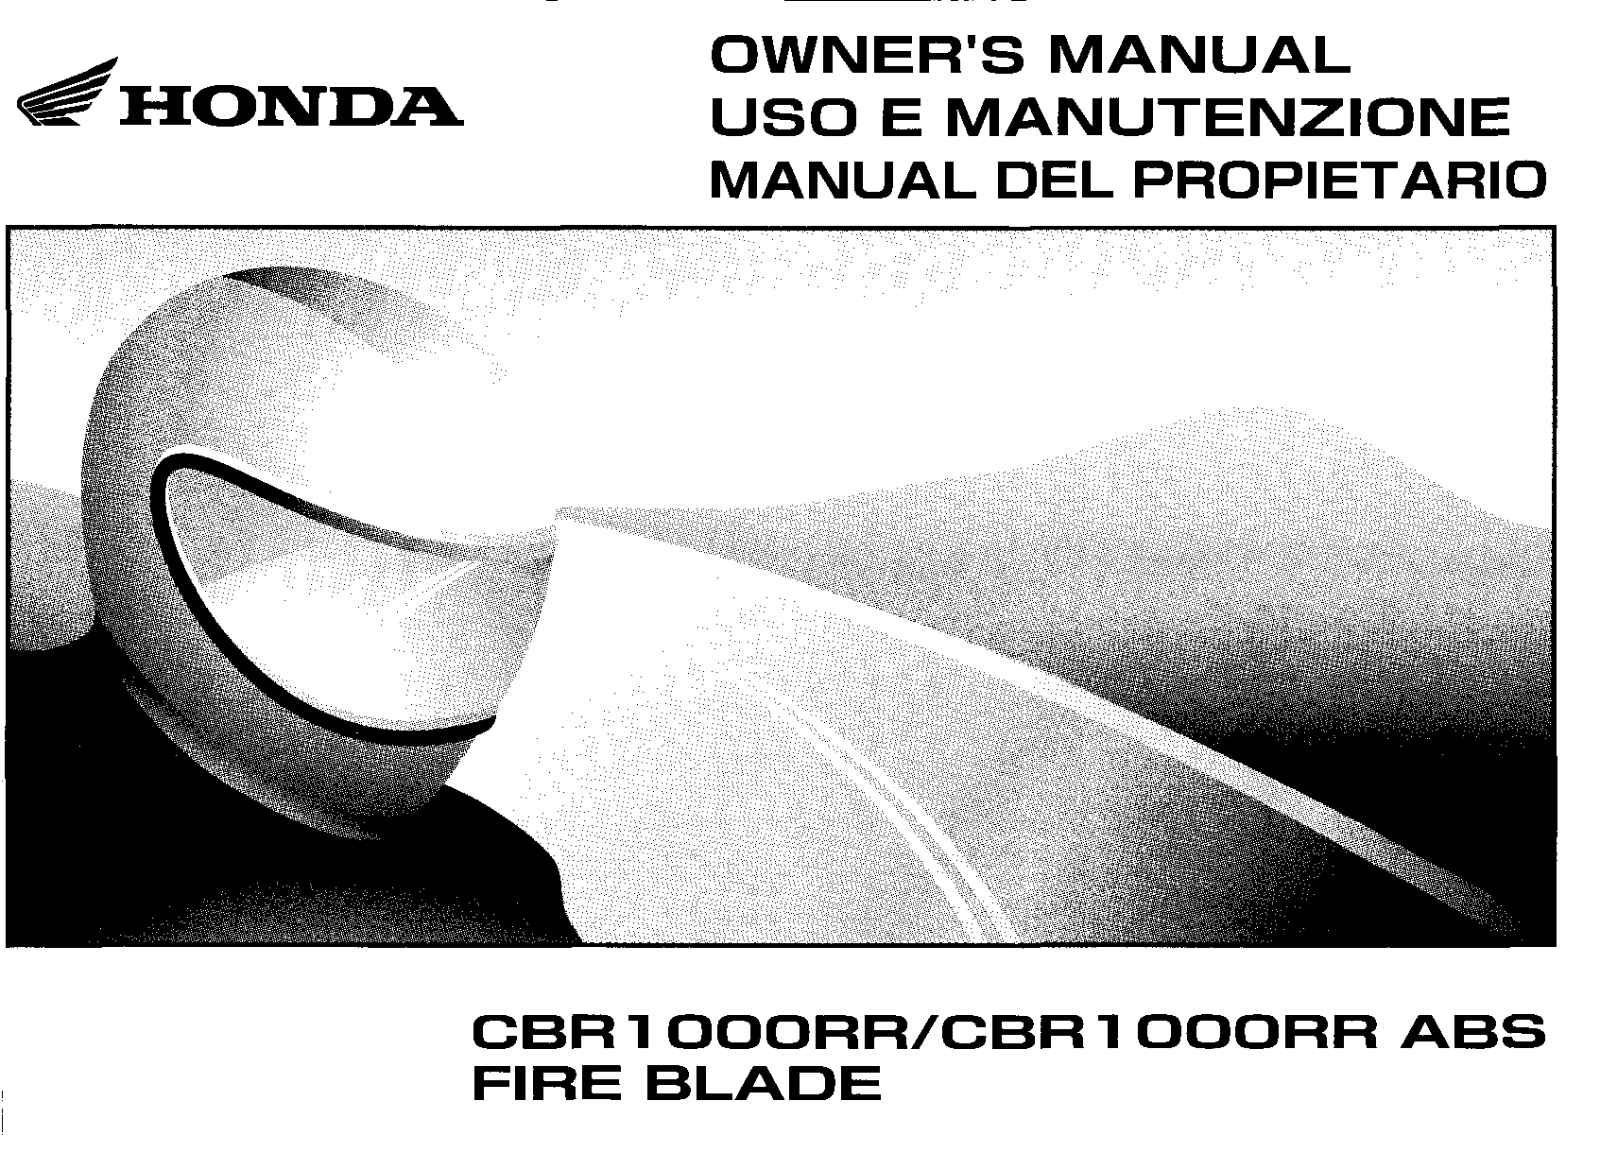 Honda CBR1000RR ABS 2008 Owner's Manual